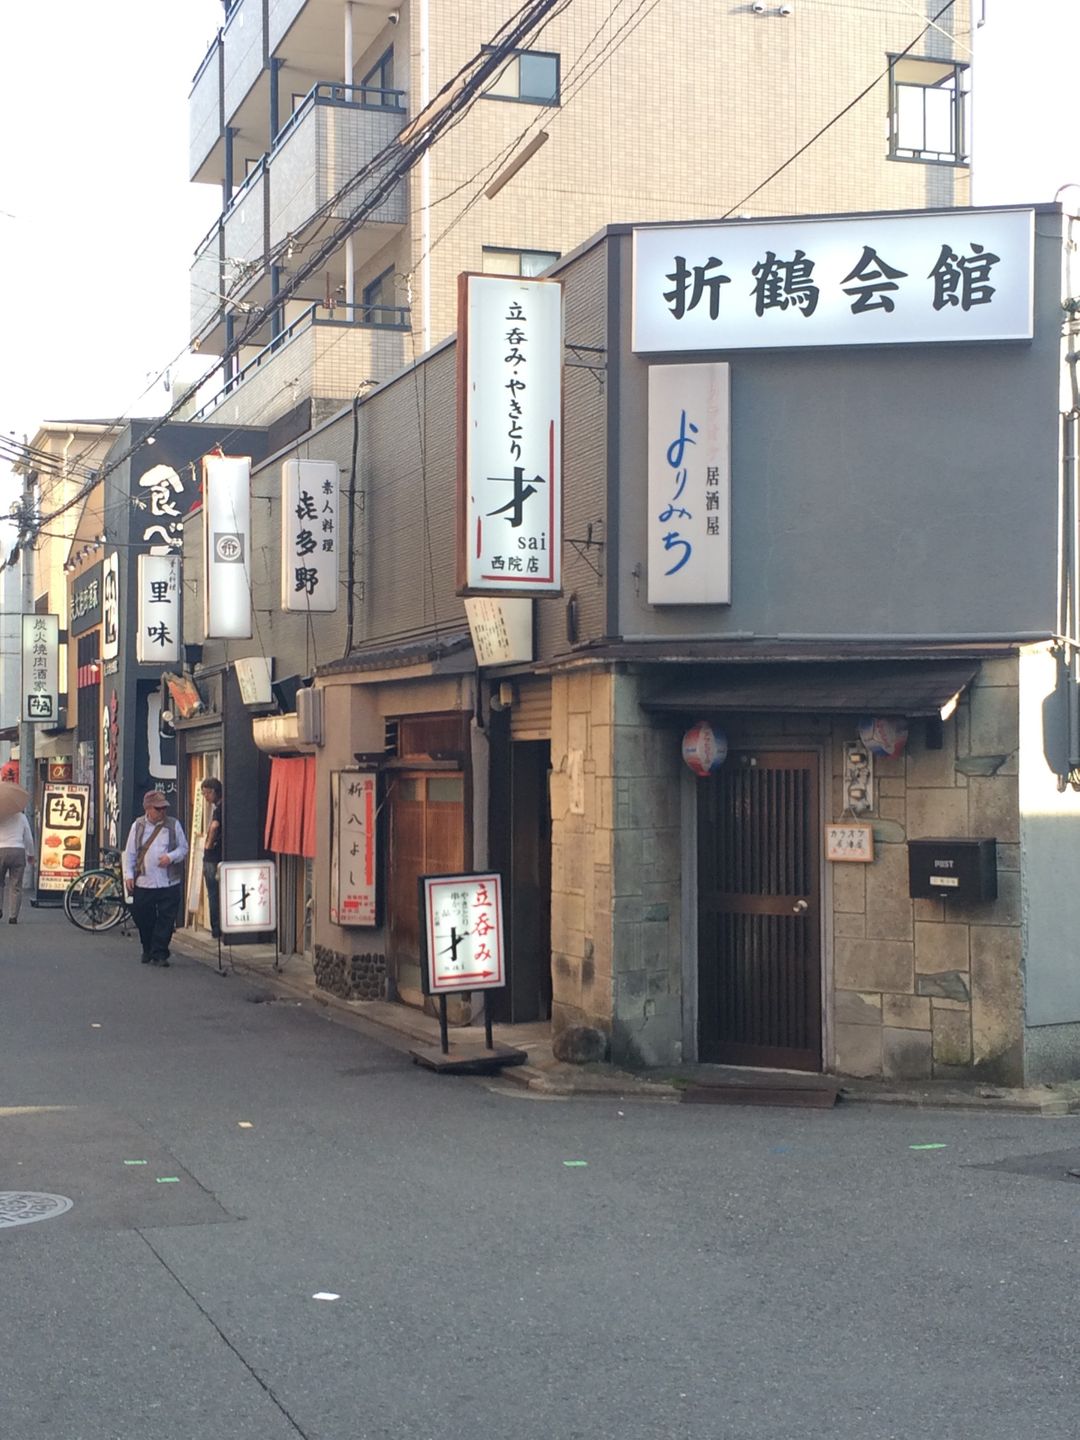 京都站著吃的立吞居酒屋 やきとり才 日本 關西 旅行酒吧